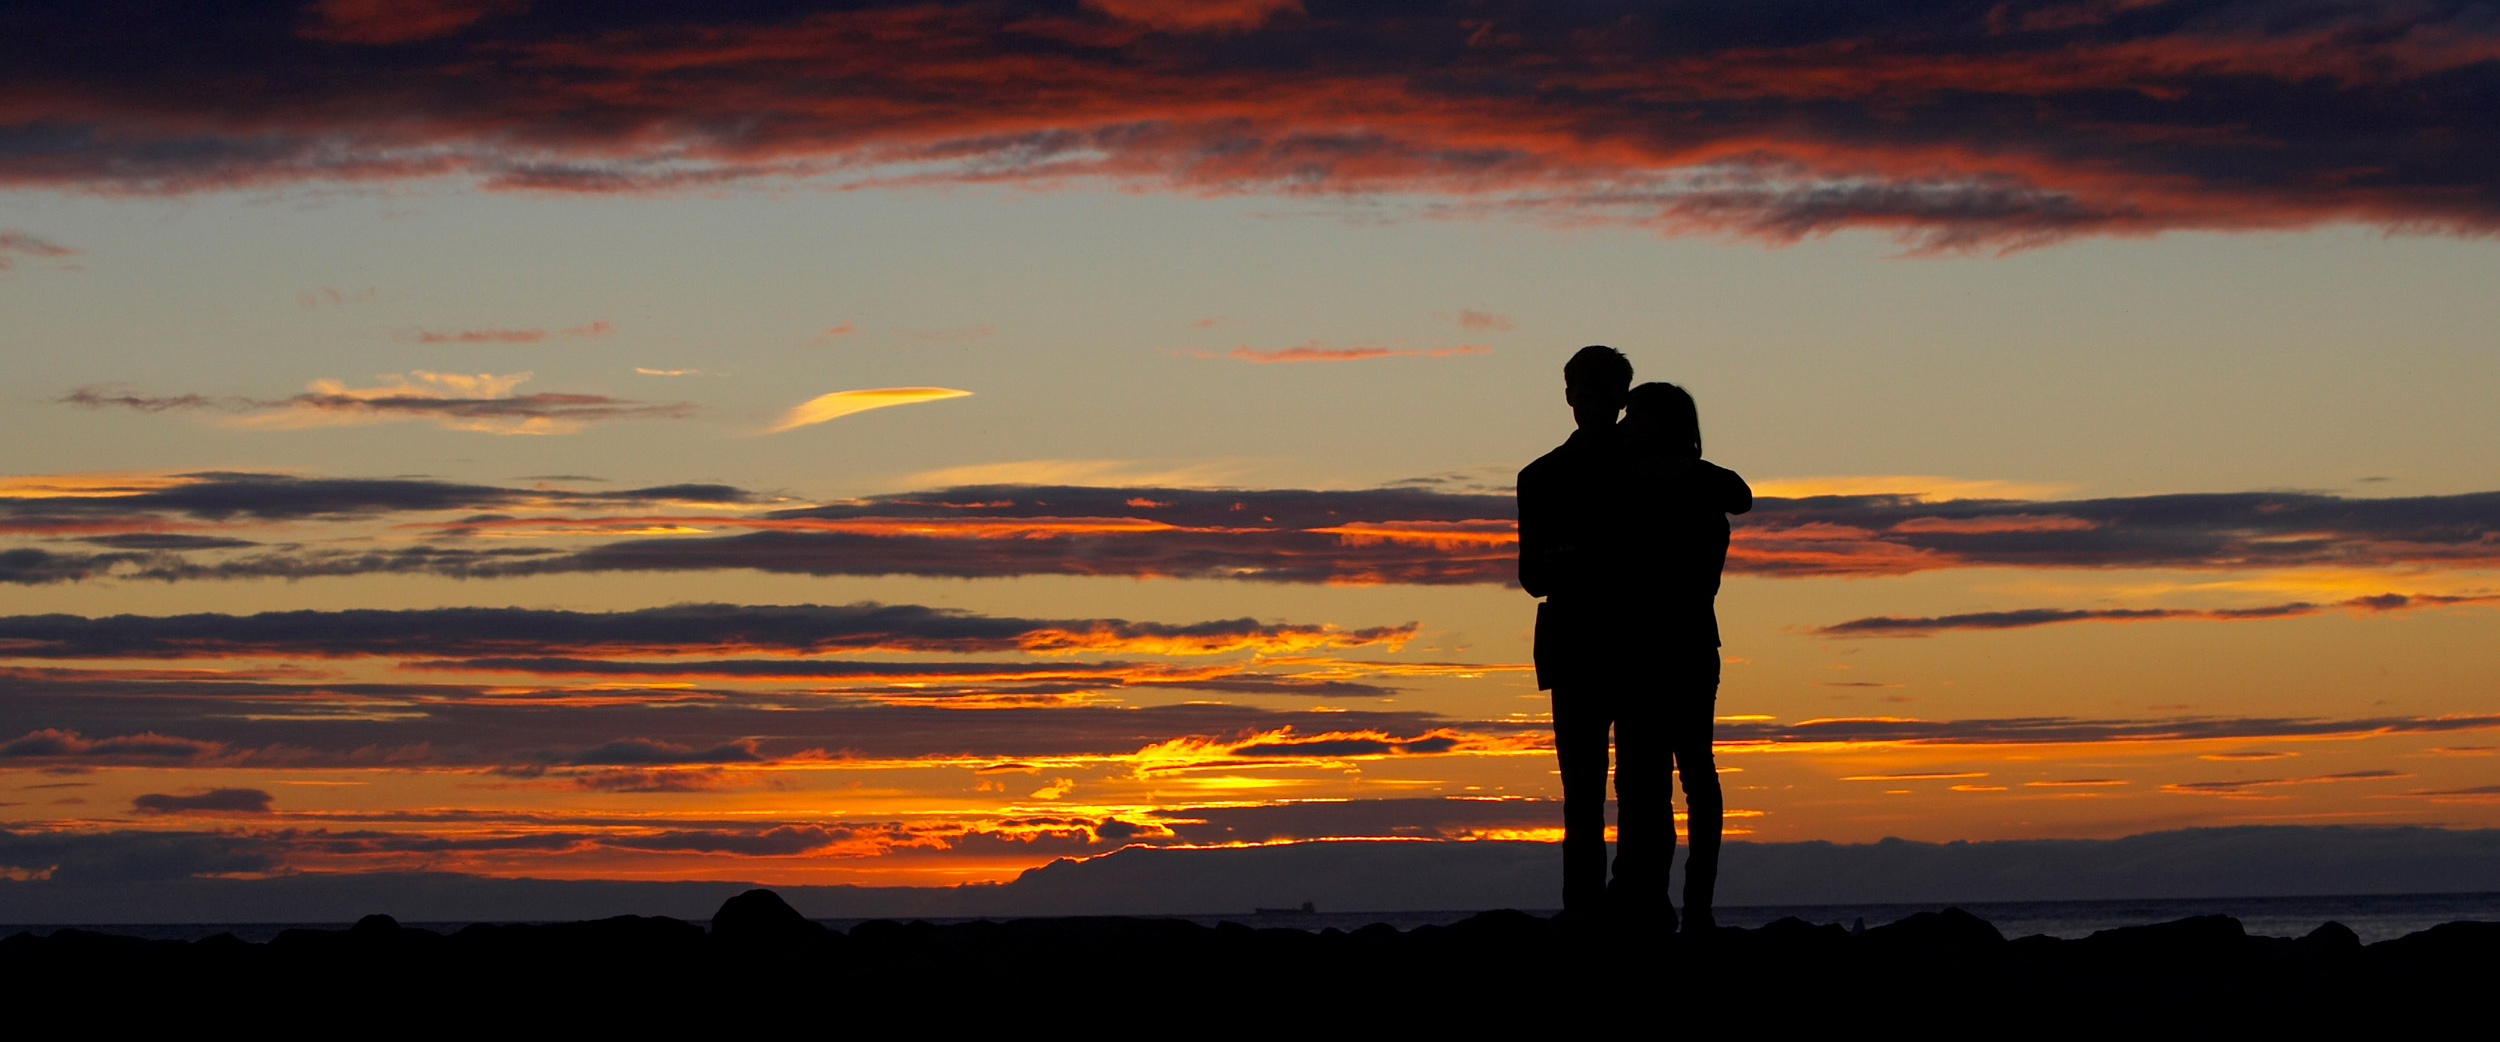 Summer sunset romance in Iceland.